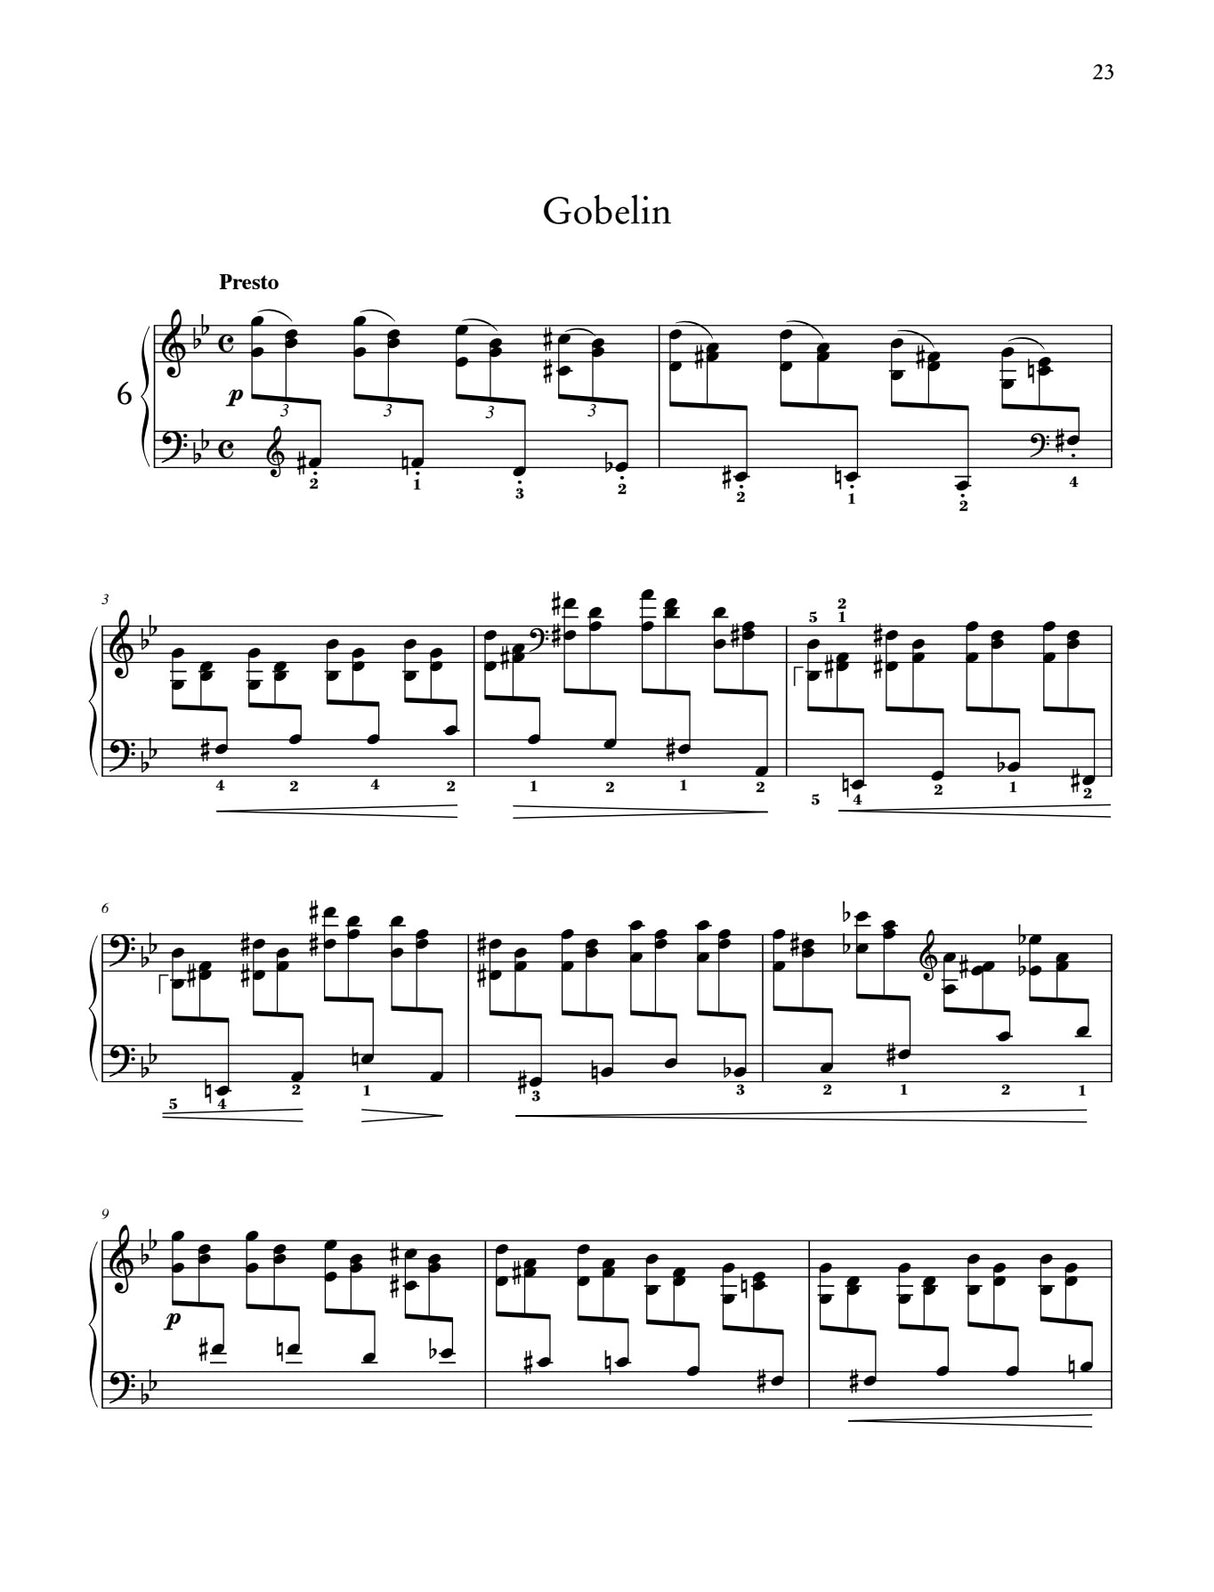 Sinding: 6 Piano Pieces, Op. 32